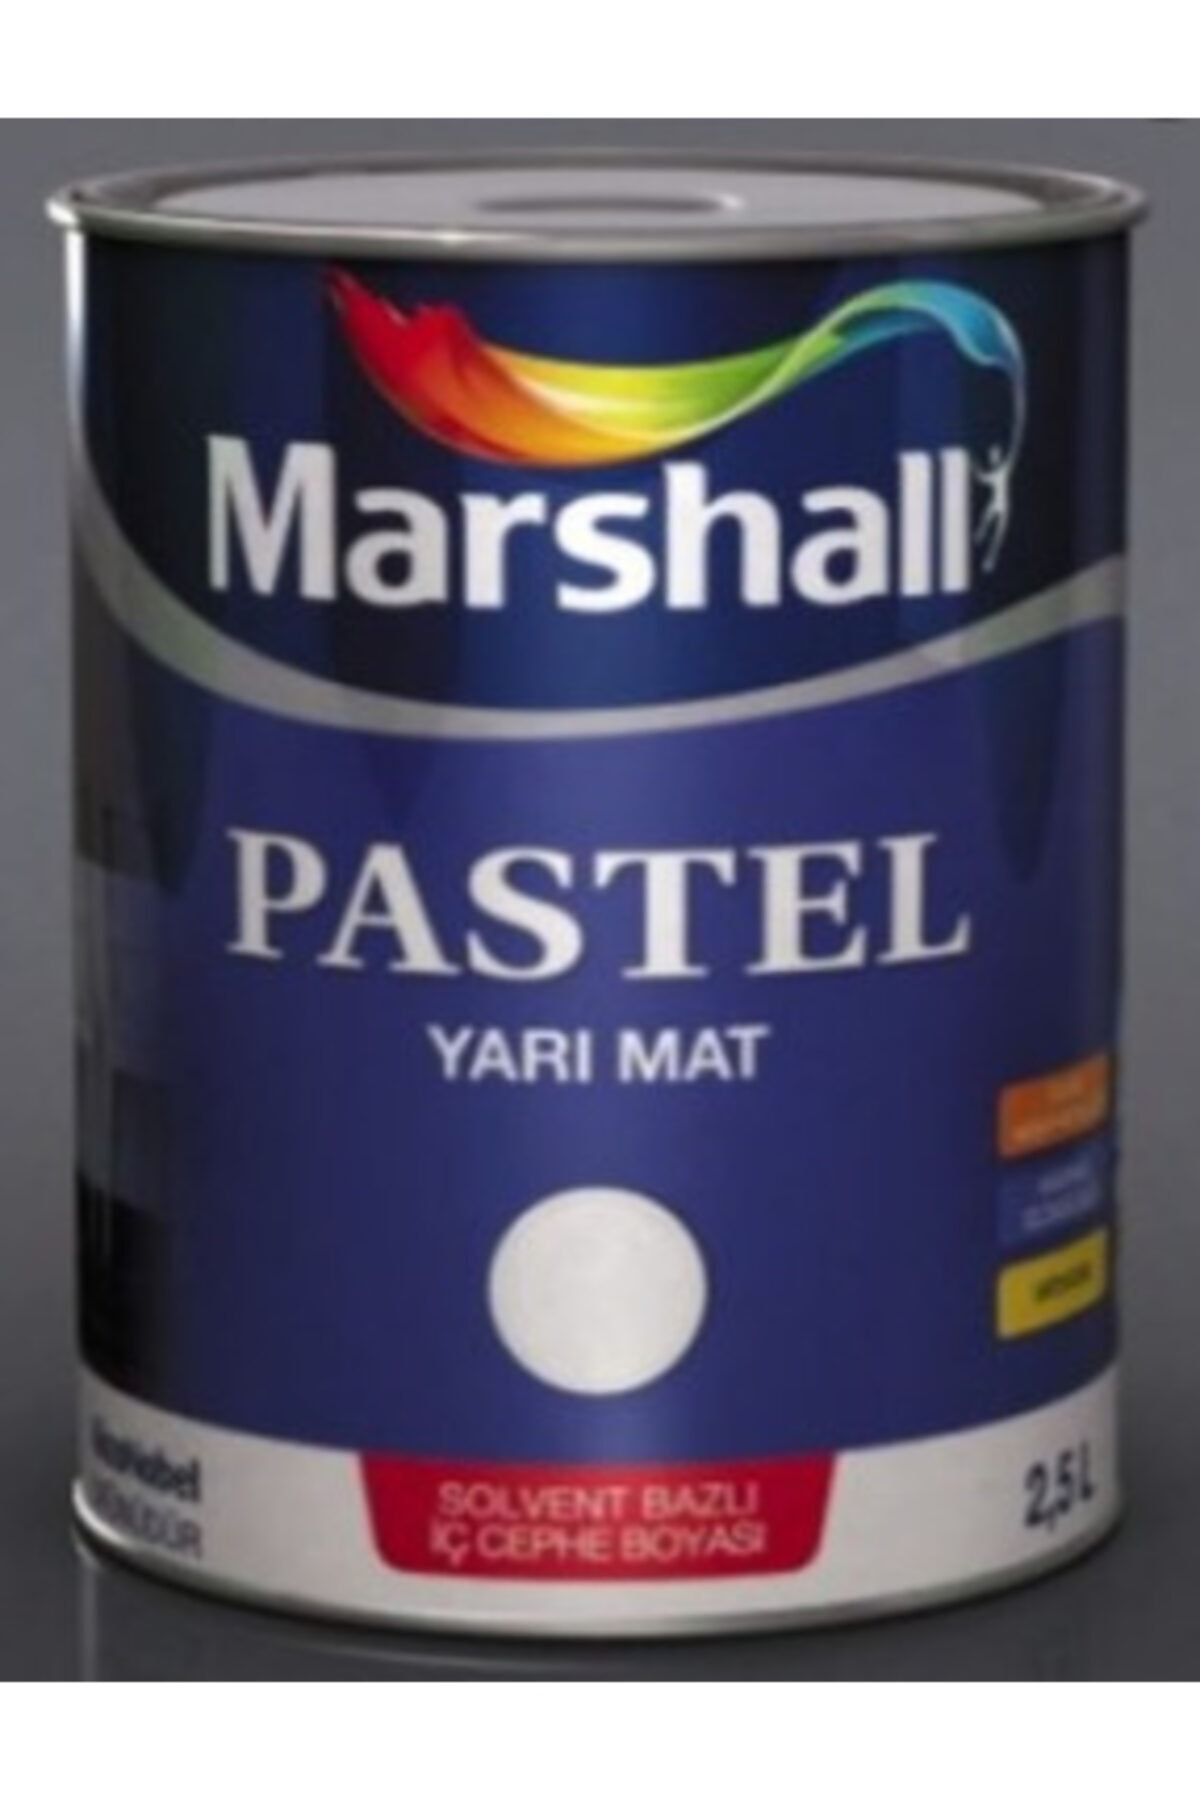 Marshall Pastel Yarımat Duvar-ahşap-metal Yağlı Boyası 2.5 Lt Ral 7016 Anterasit Gri